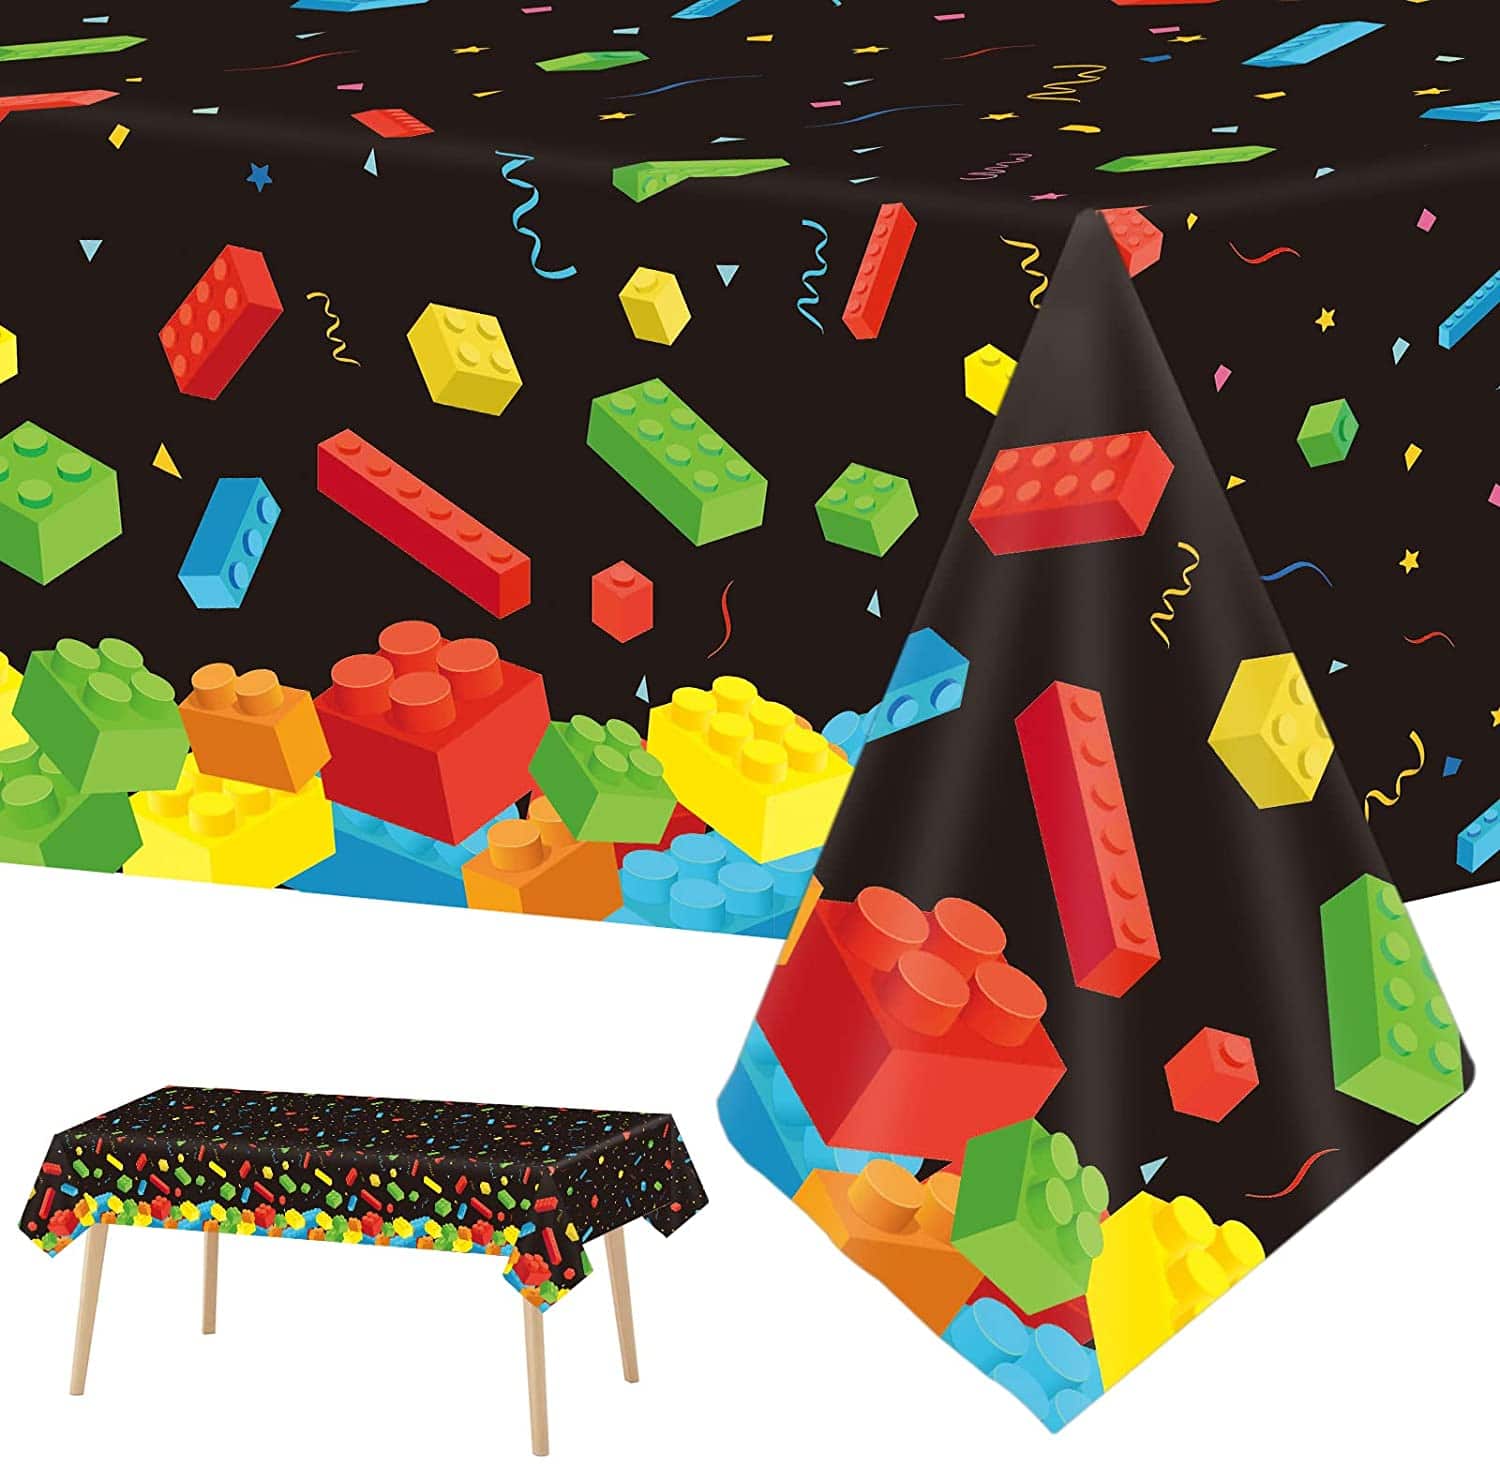 lego-party-ideas-tablecloth